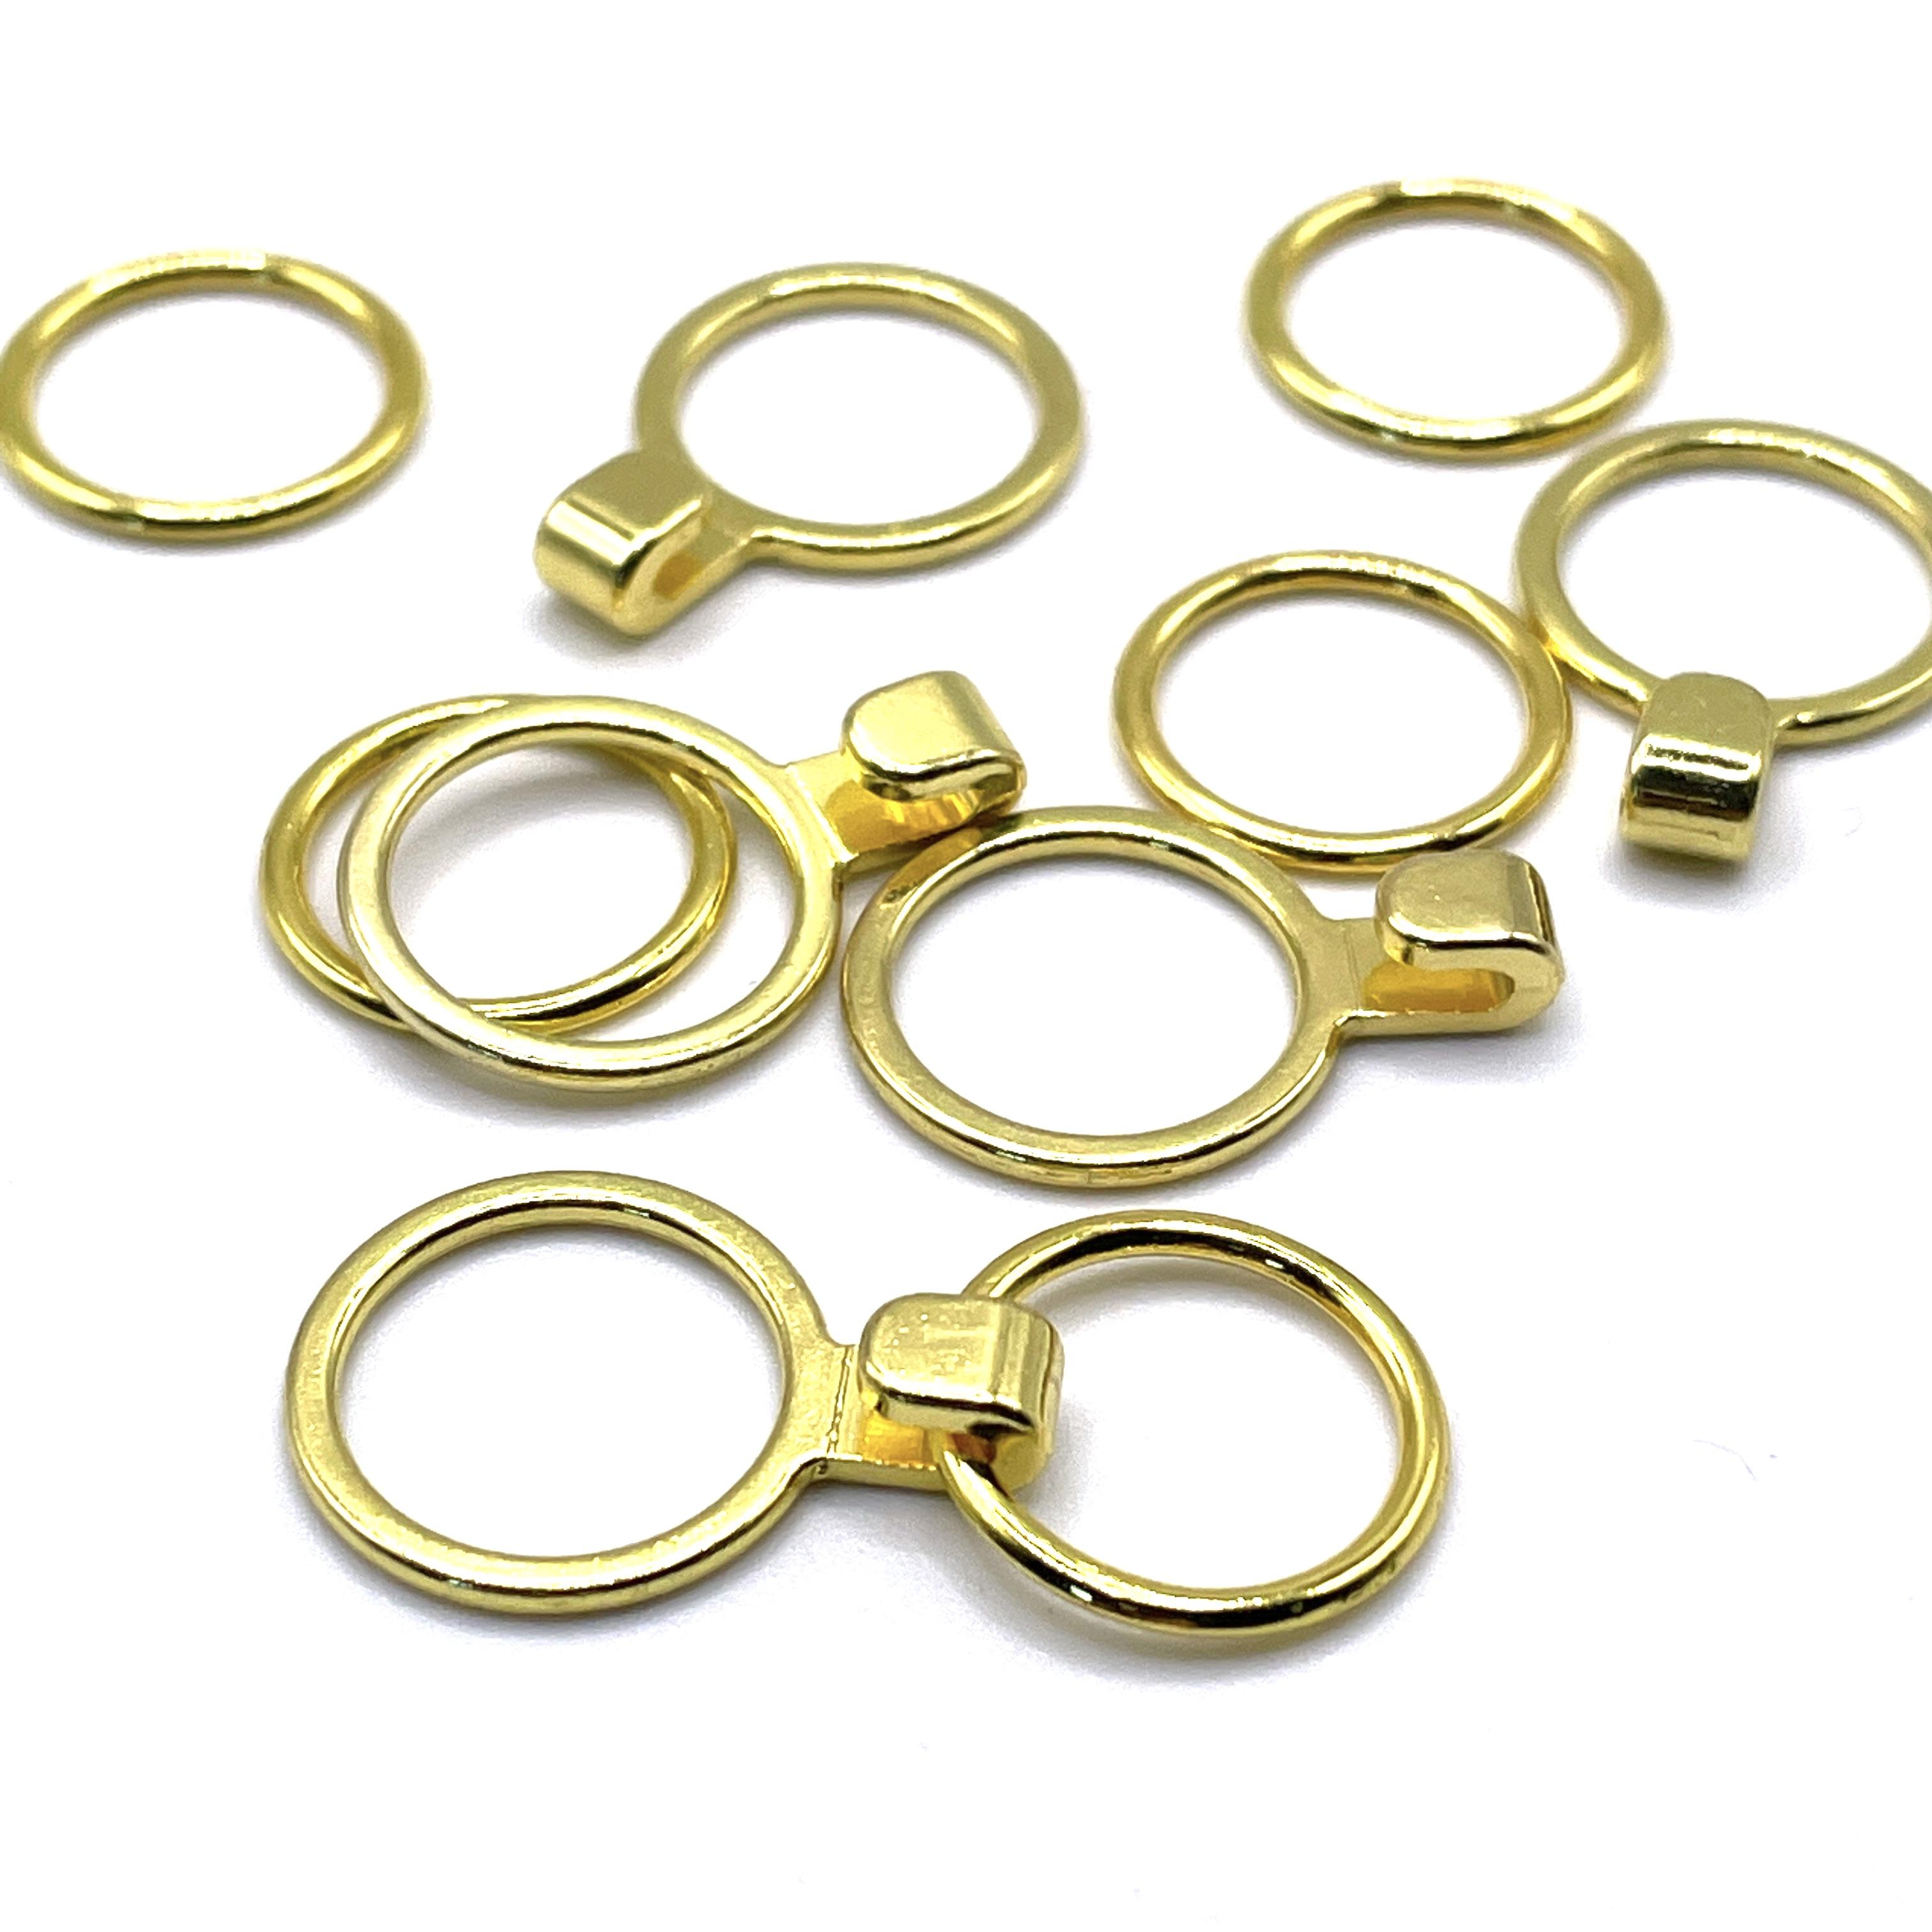 Bra/Suspender Fittings - 12mm BRIGHT GOLD Colour Metal HOOK & RING SET